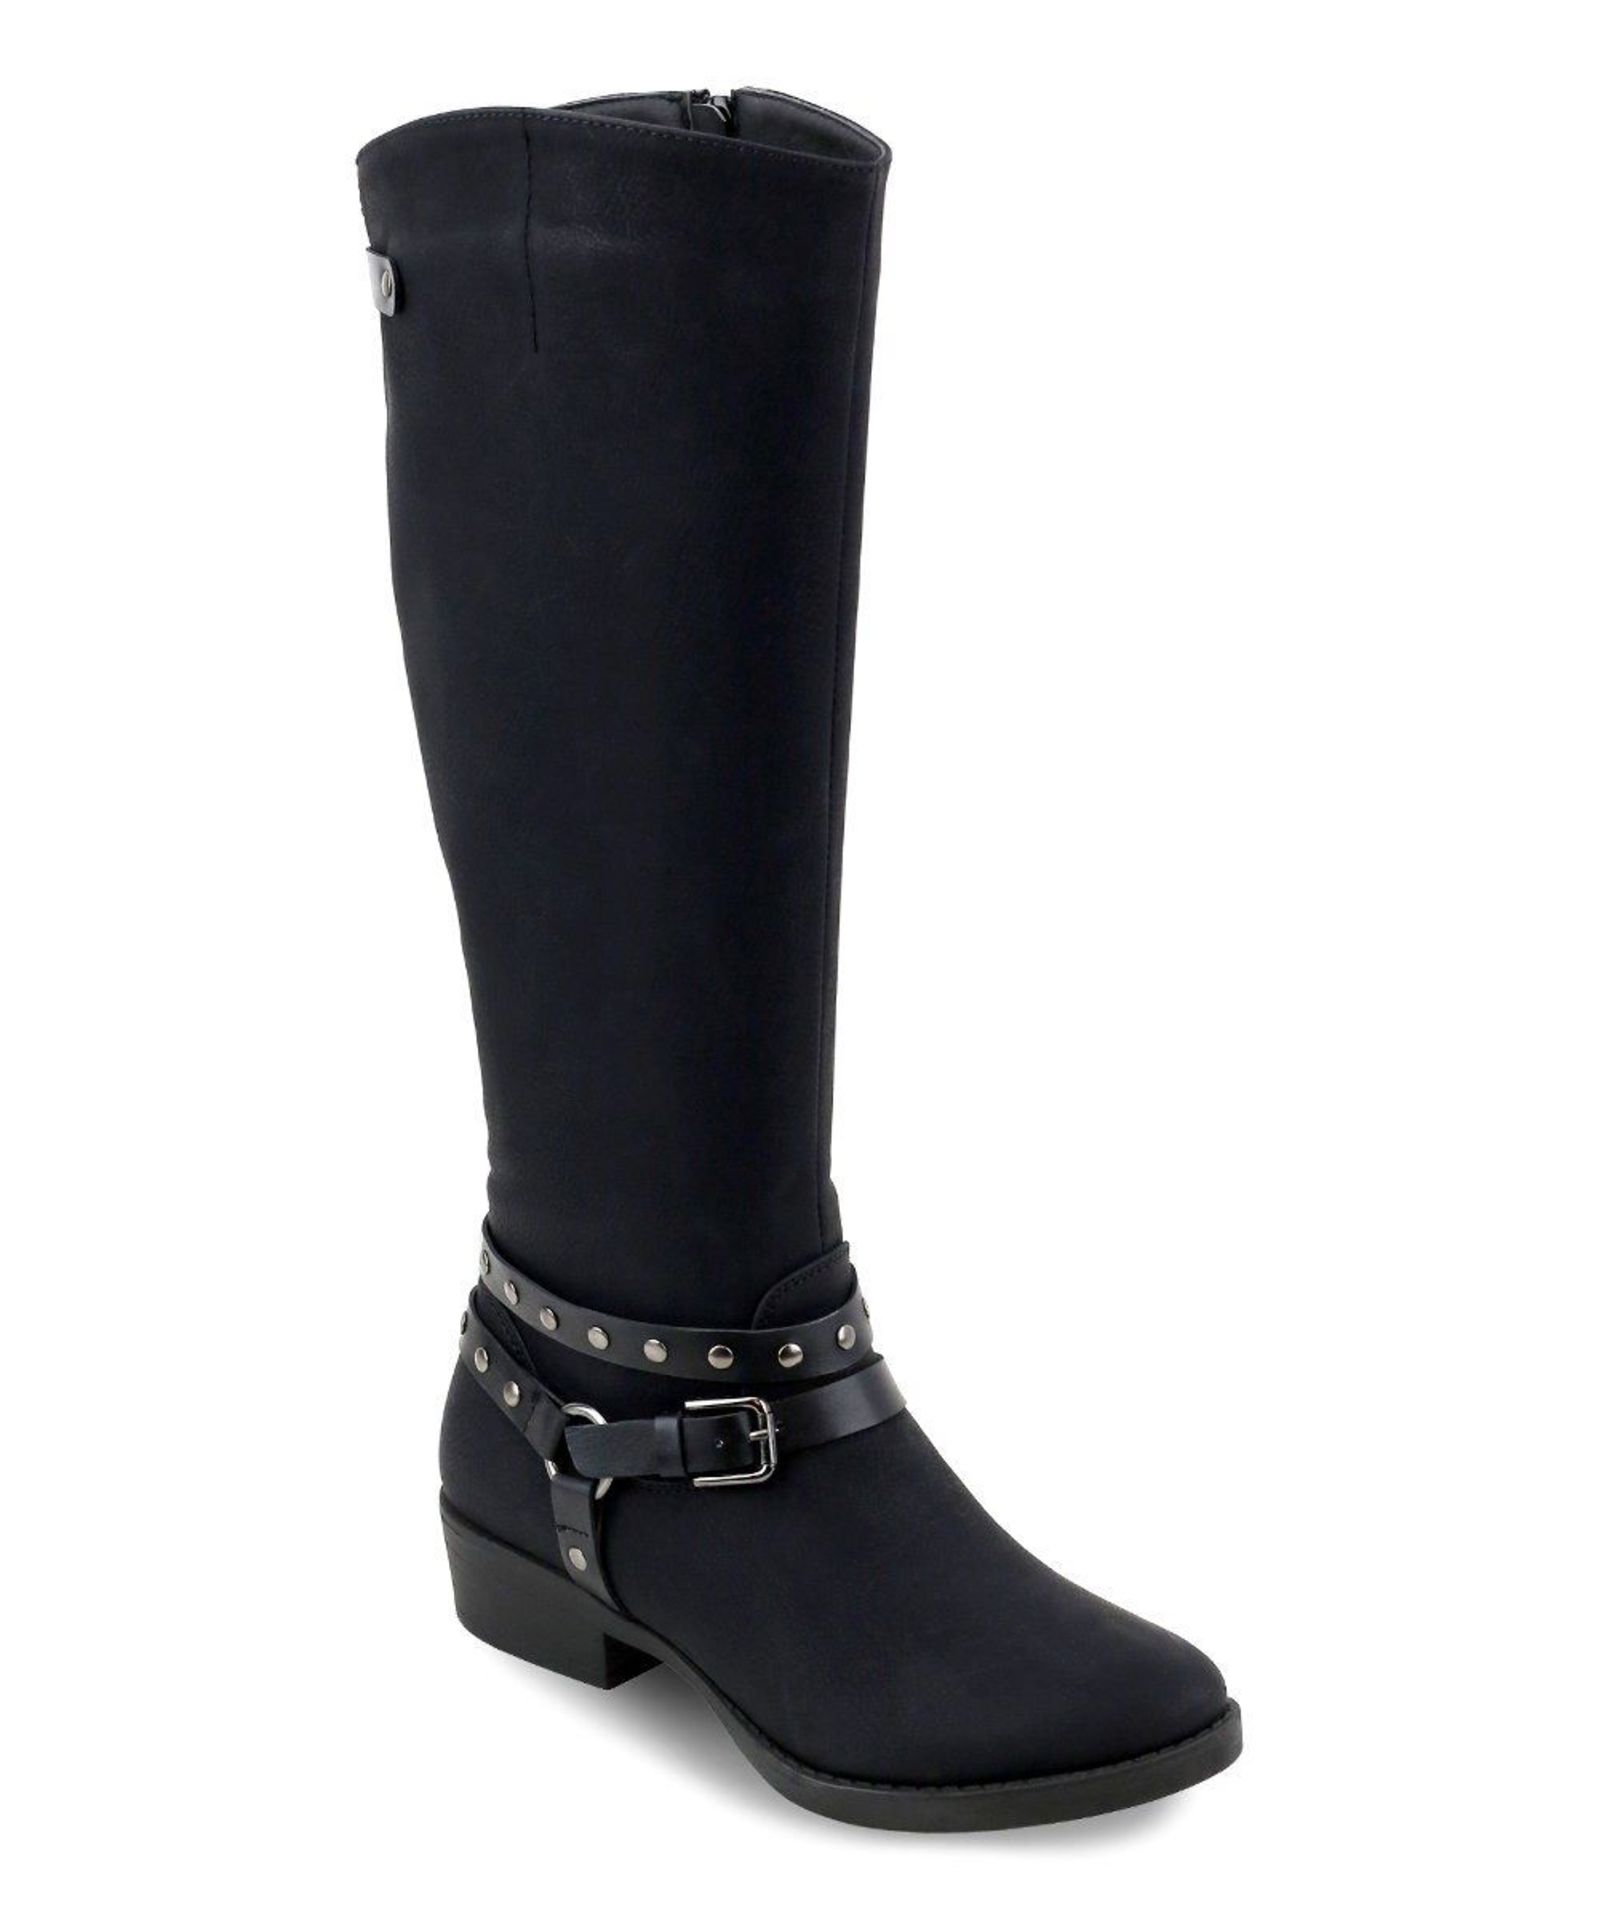 OLIVIA MILLER Black Freeport Riding Boot (Uk Size 6:Us Size 8) (New with box) [Ref: 50171948-I-003]